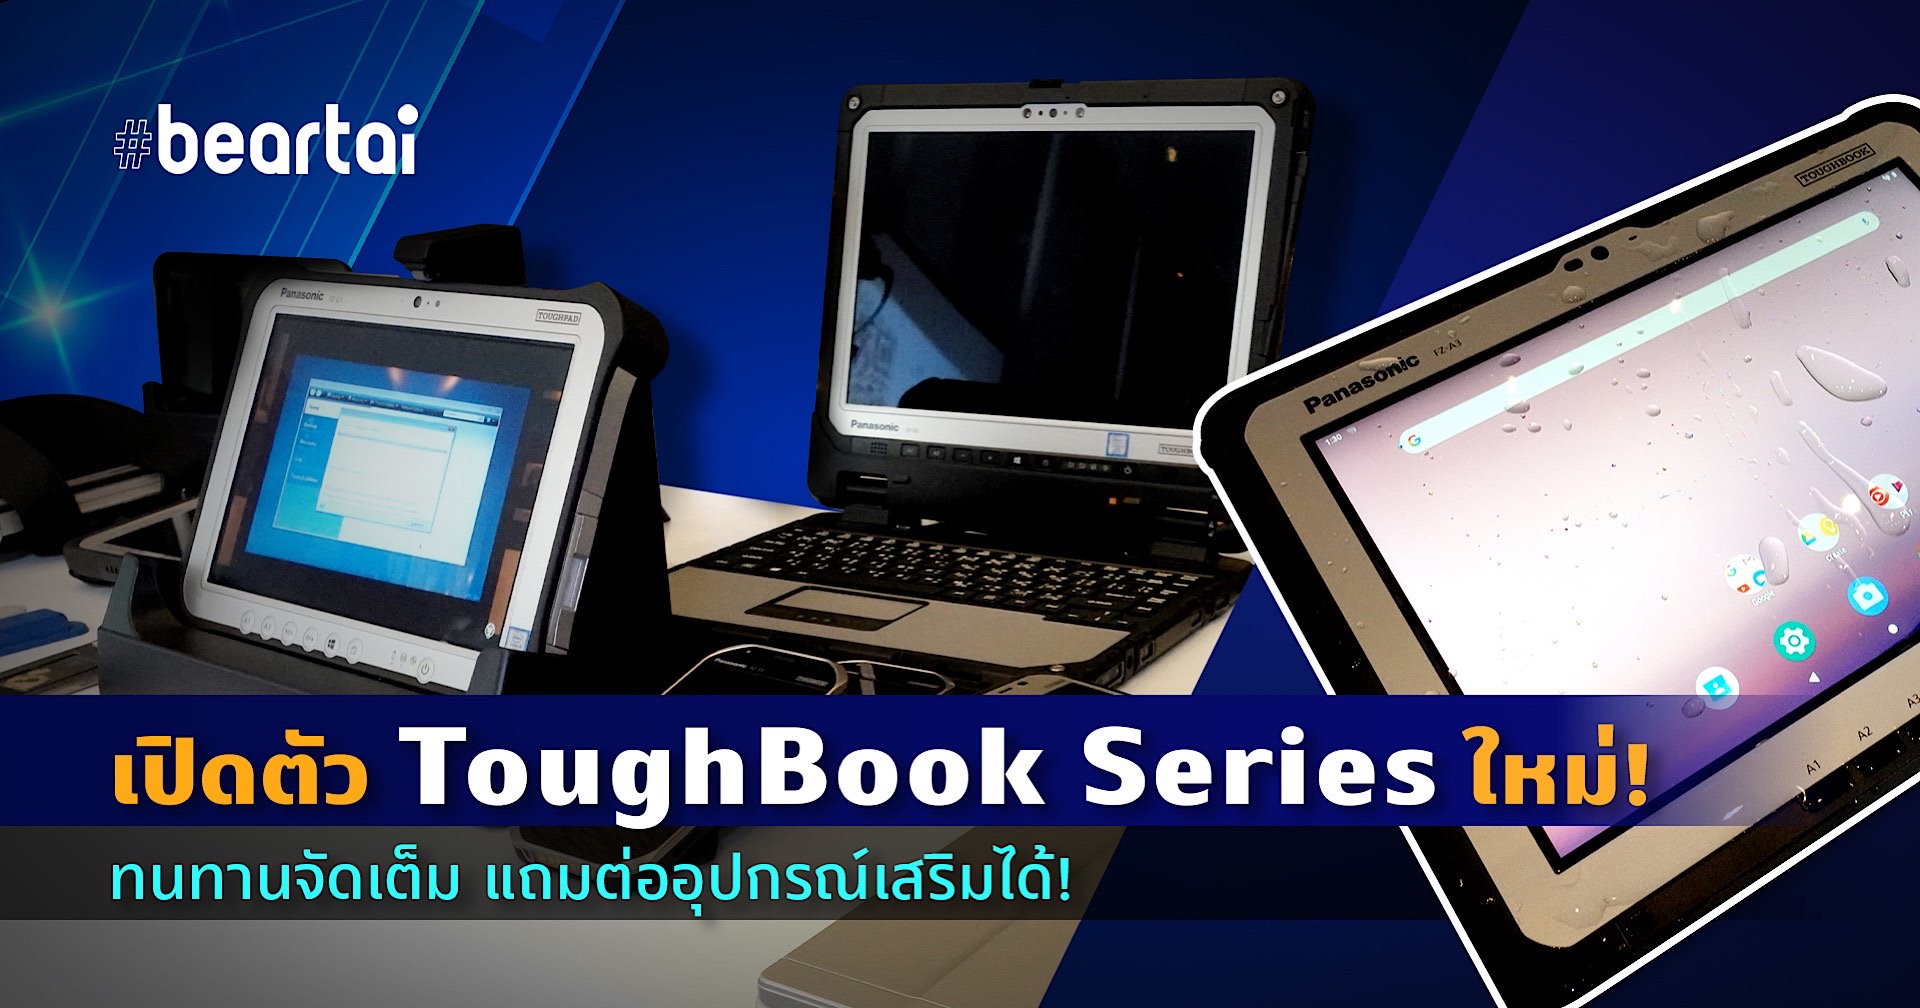 Panasonic เปิดตัว ToughBook Series ตอบโจทย์คนทำงานสายลุย!